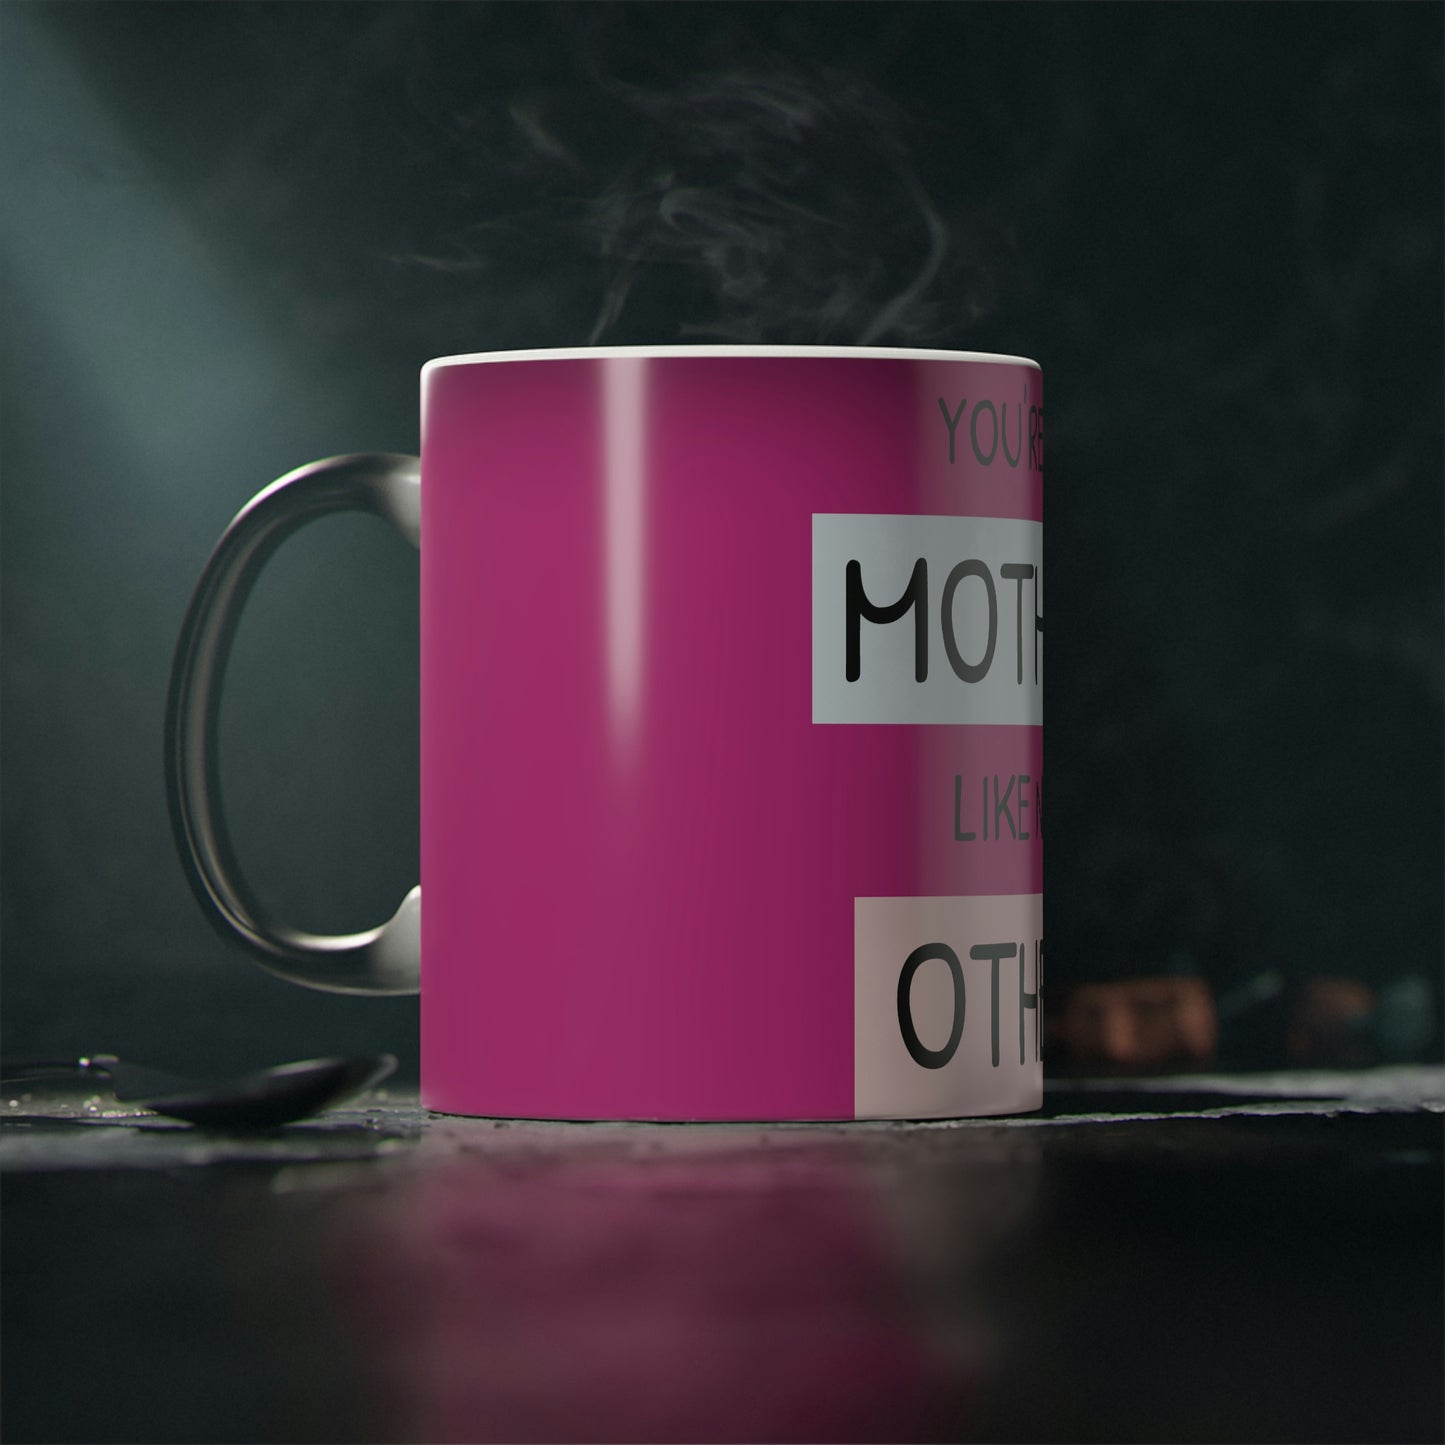 Magic Mug "You're a Mother Like no Other"